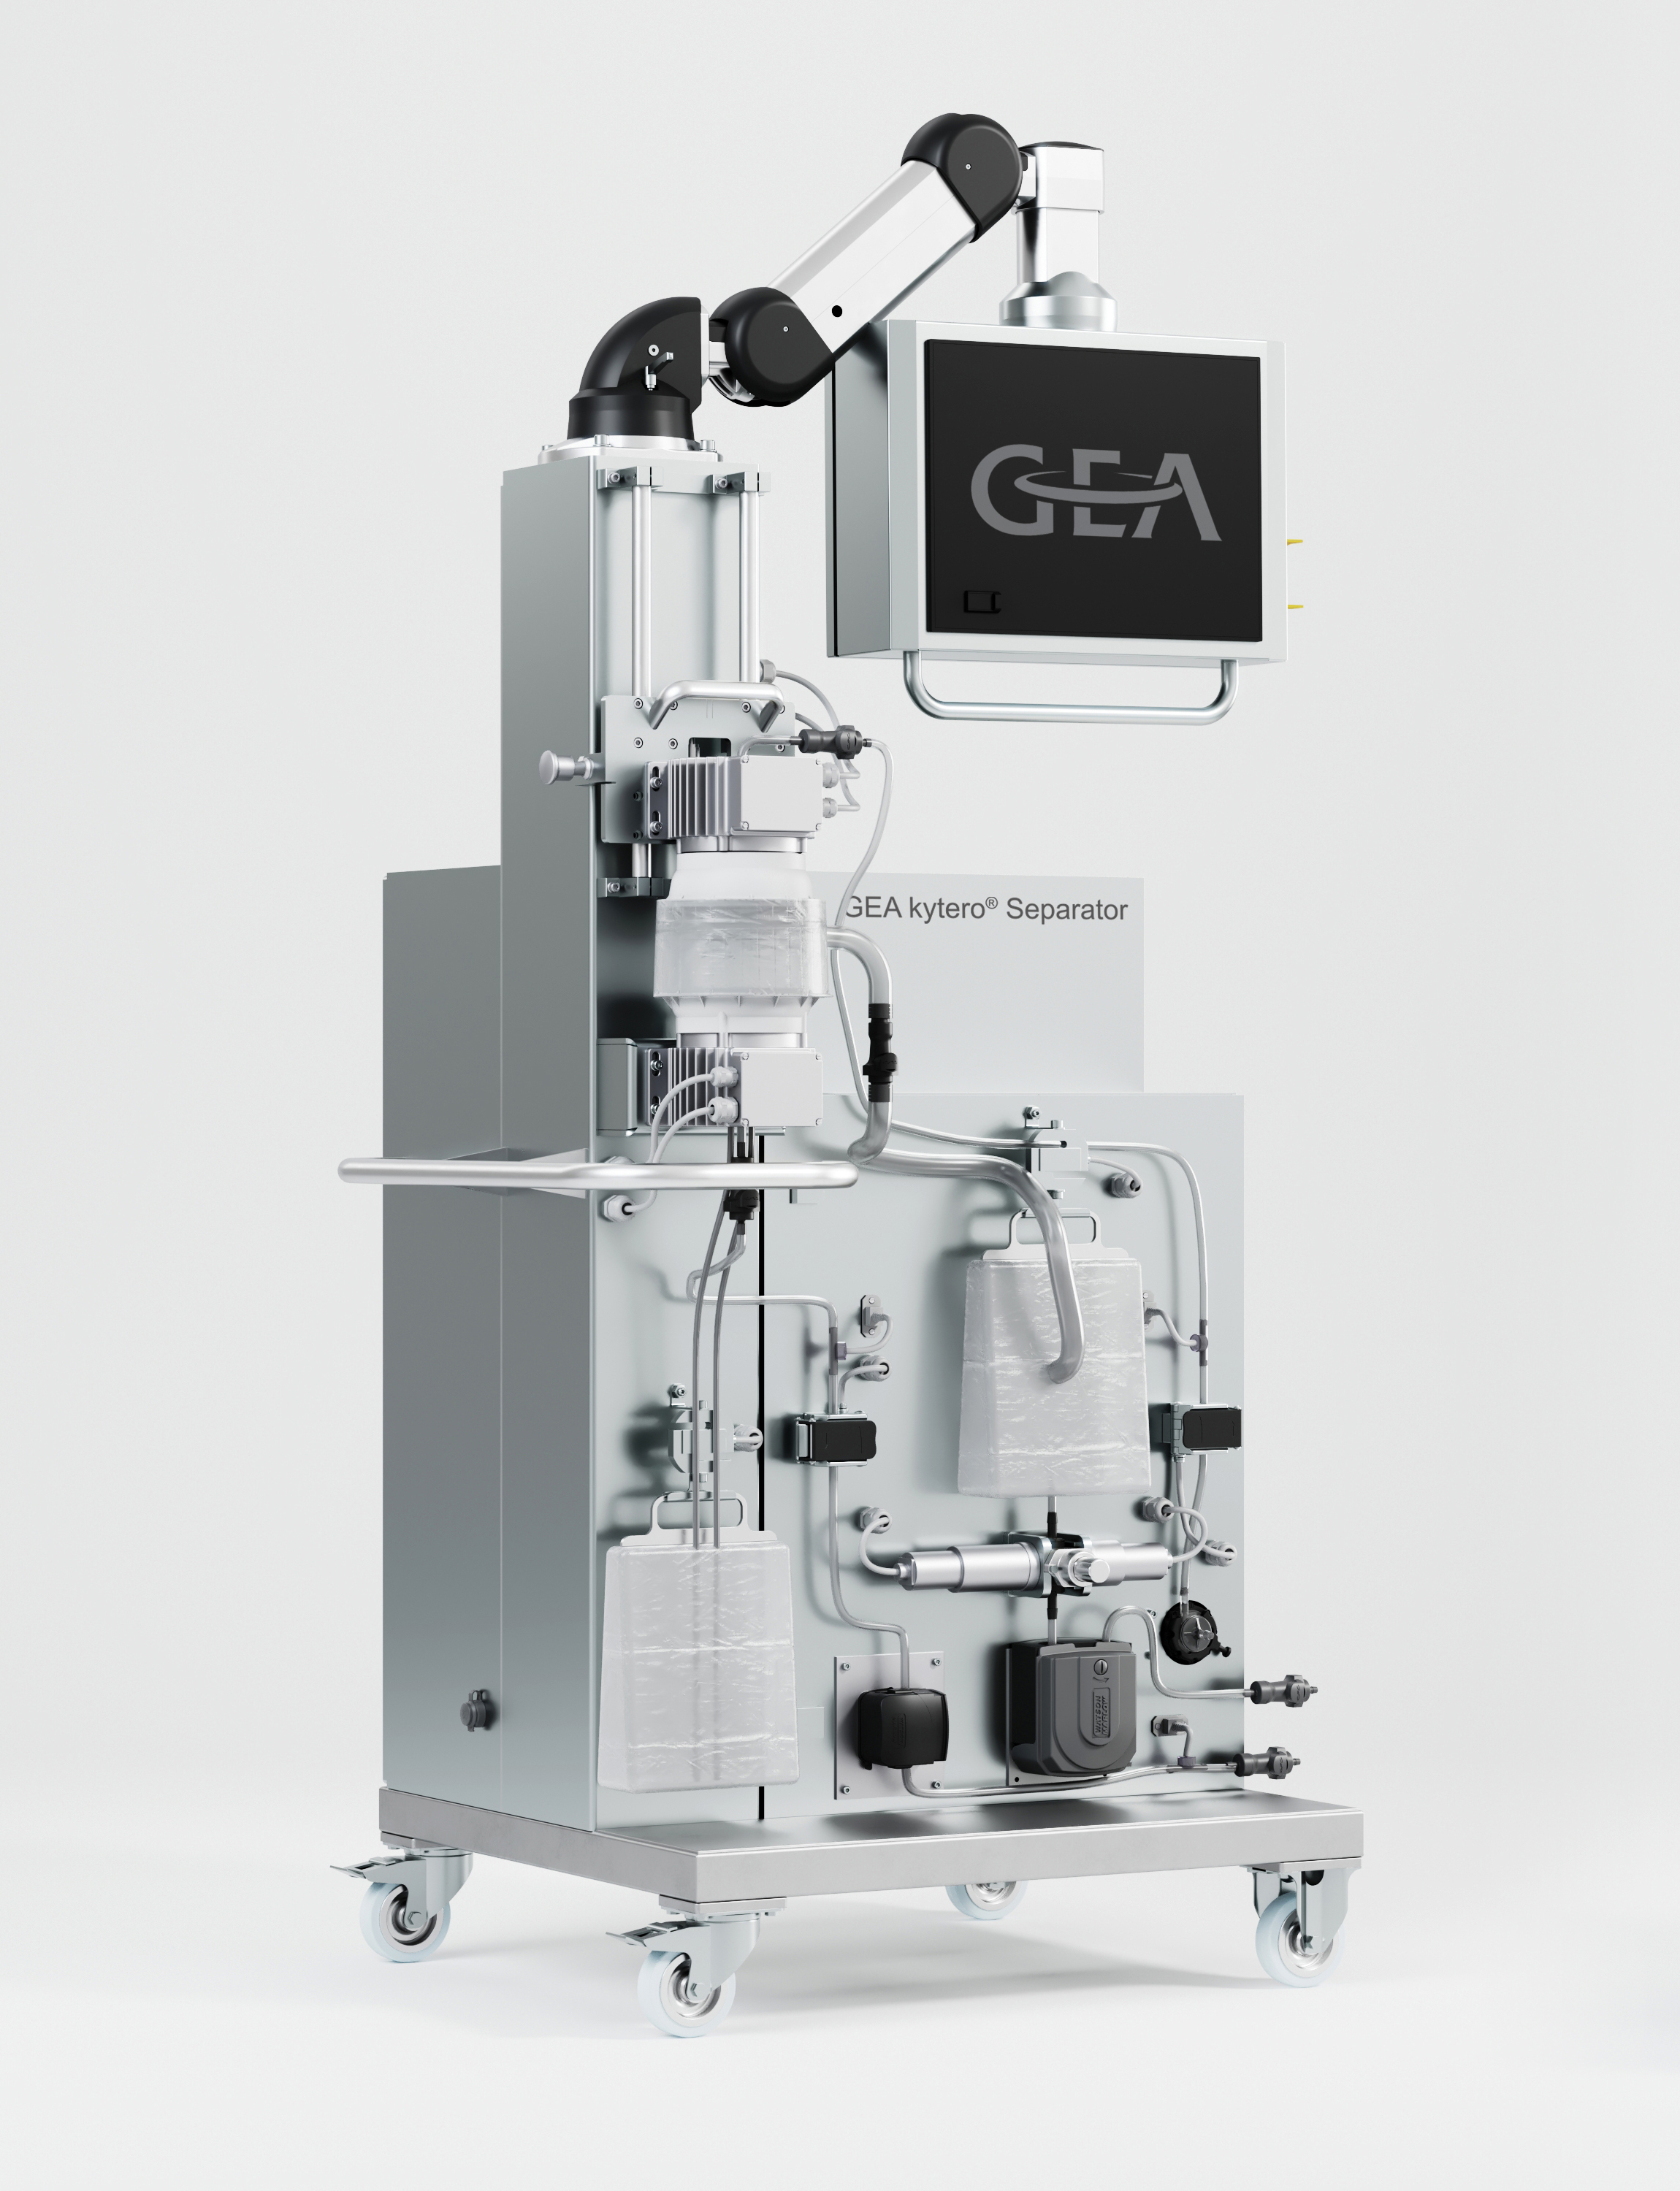 GEA为欧洲、亚洲和美国提供kytero分离器